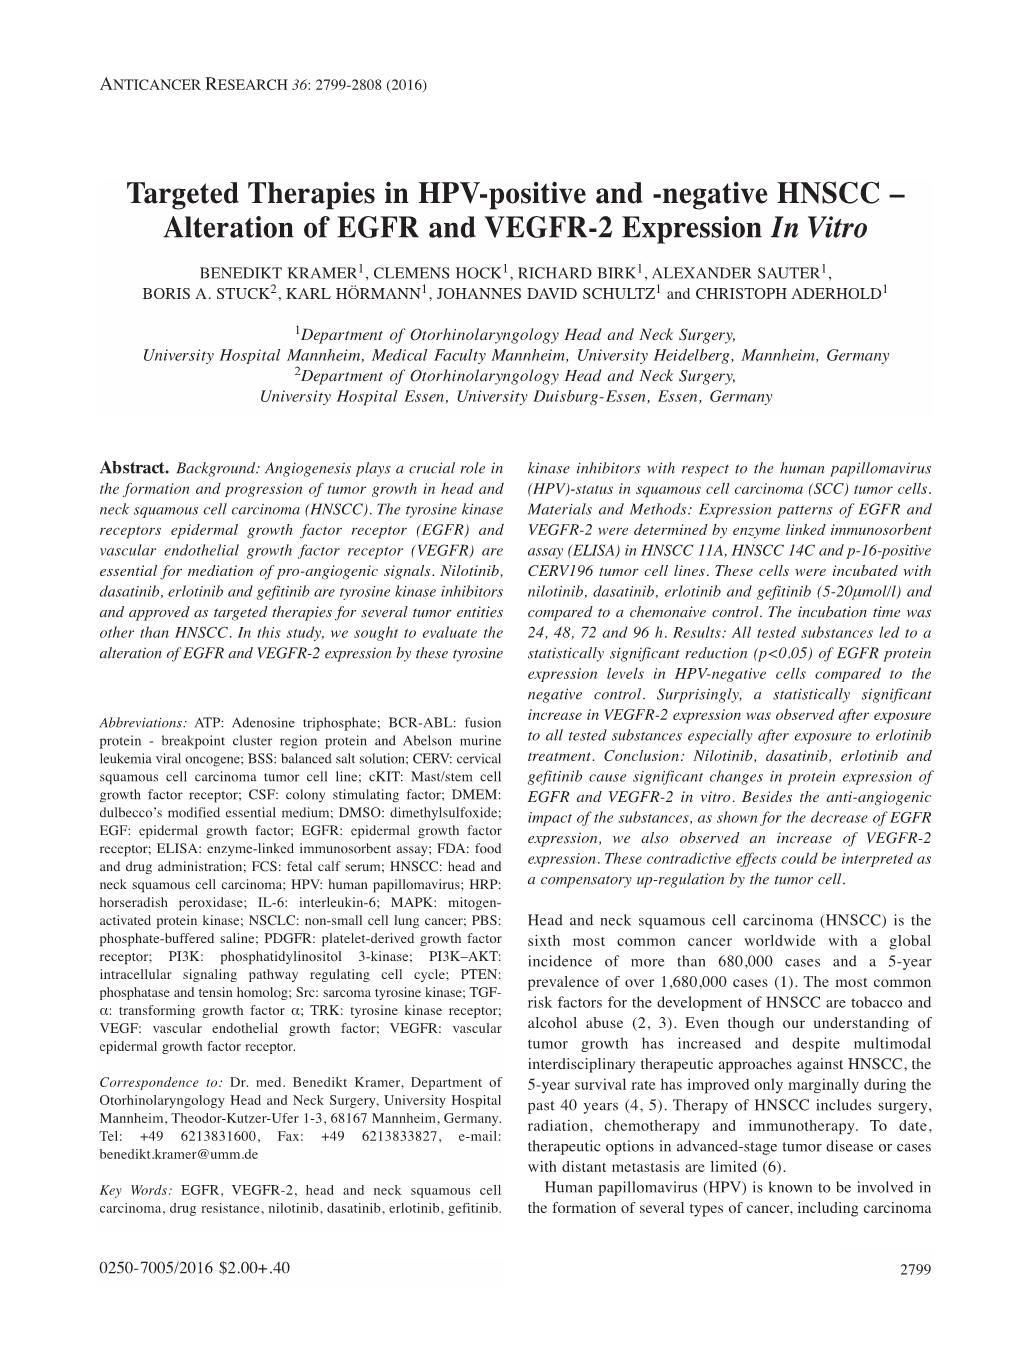 Negative HNSCC – Alteration of EGFR and VEGFR-2 Expression in Vitro